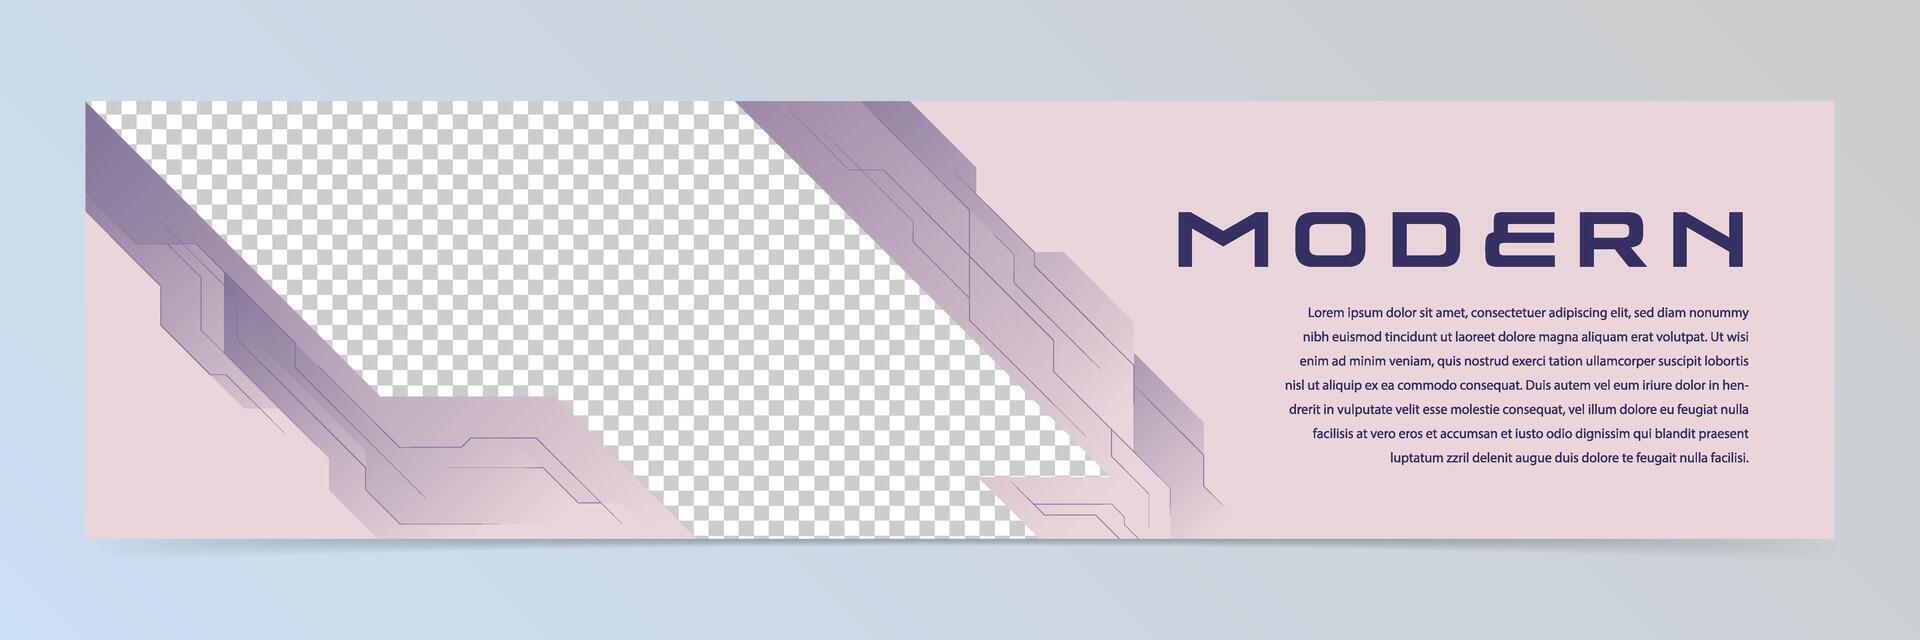 Modern abstract futuristic banner design template vector